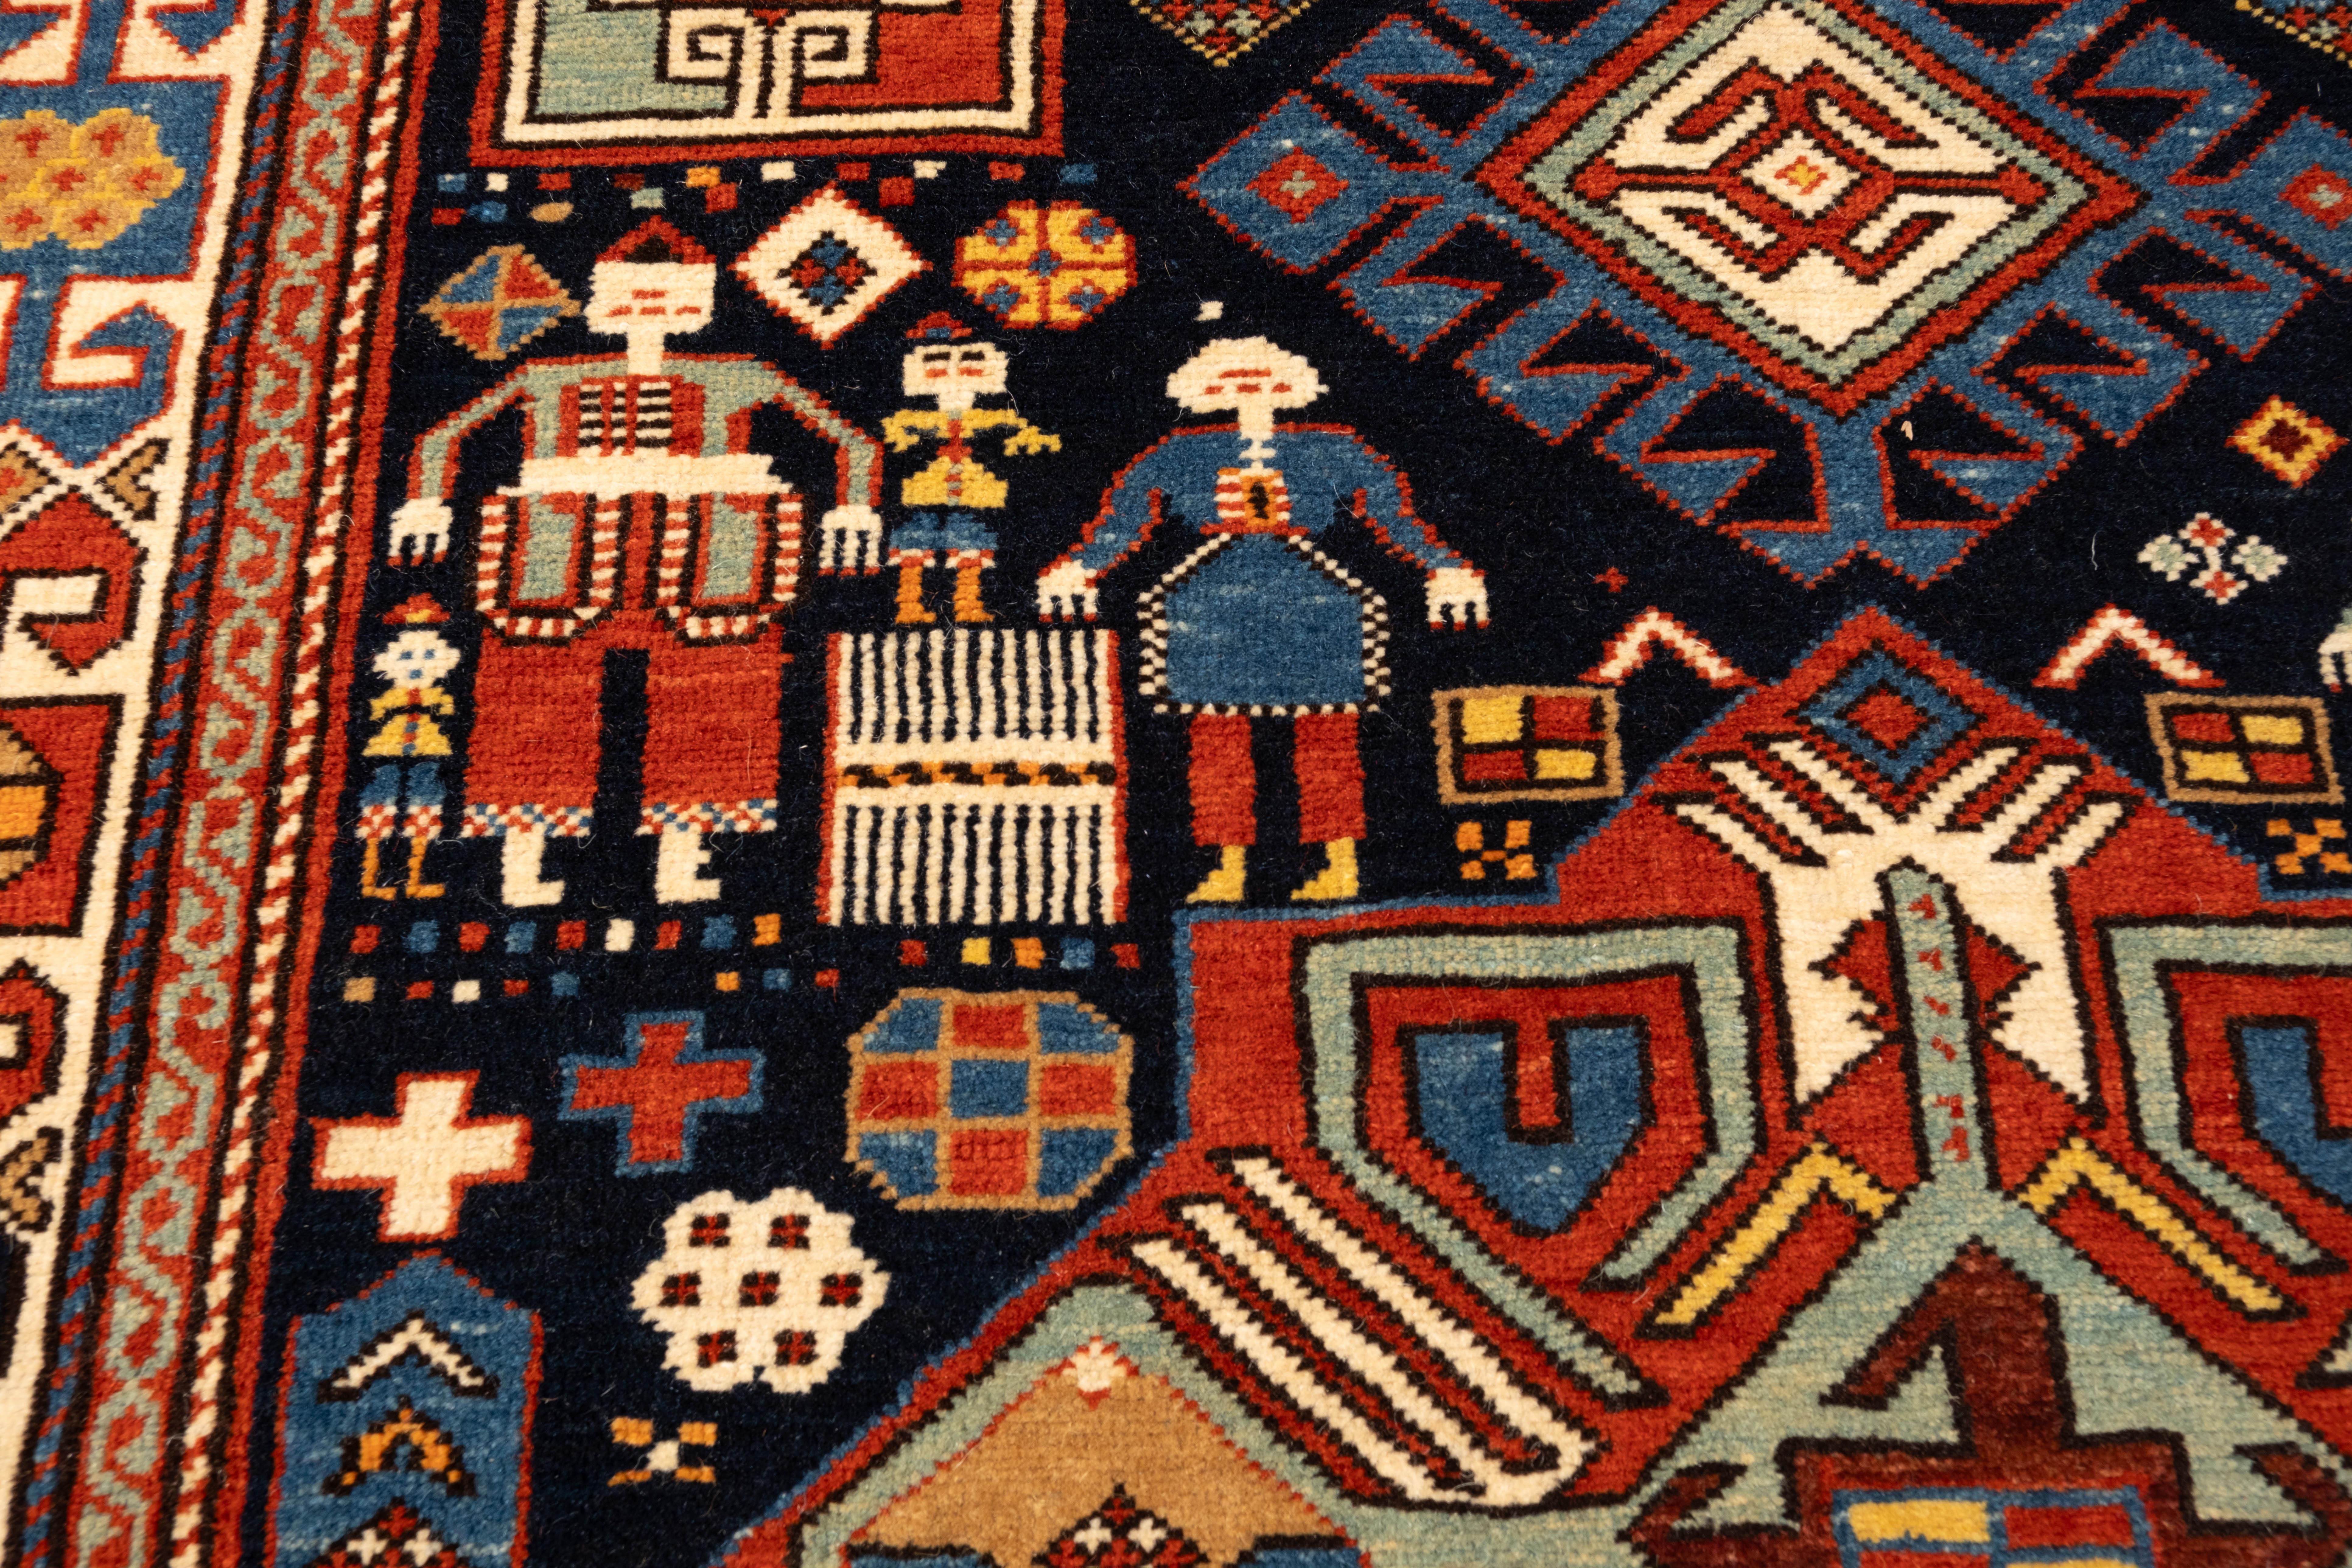 Vegetable Dyed Ararat Rugs Akstafa Kazak Rug, 19th C. Caucasian Revival Carpet Natural Dyed For Sale